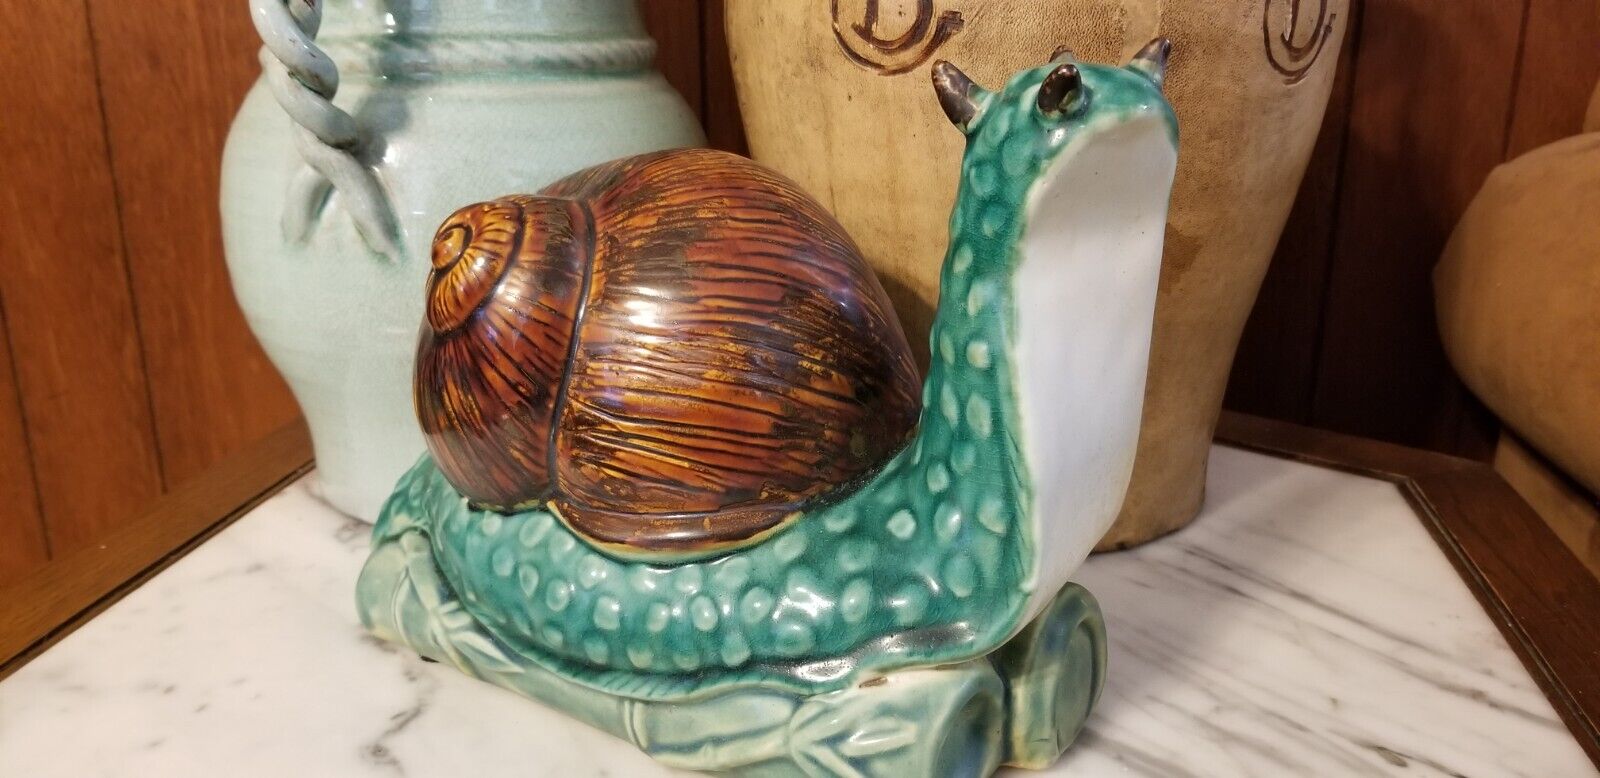 Vntg Large Ceramic 4 Horned Bumpy Snail On Bamboo Rare MCM Monster Snail Figure